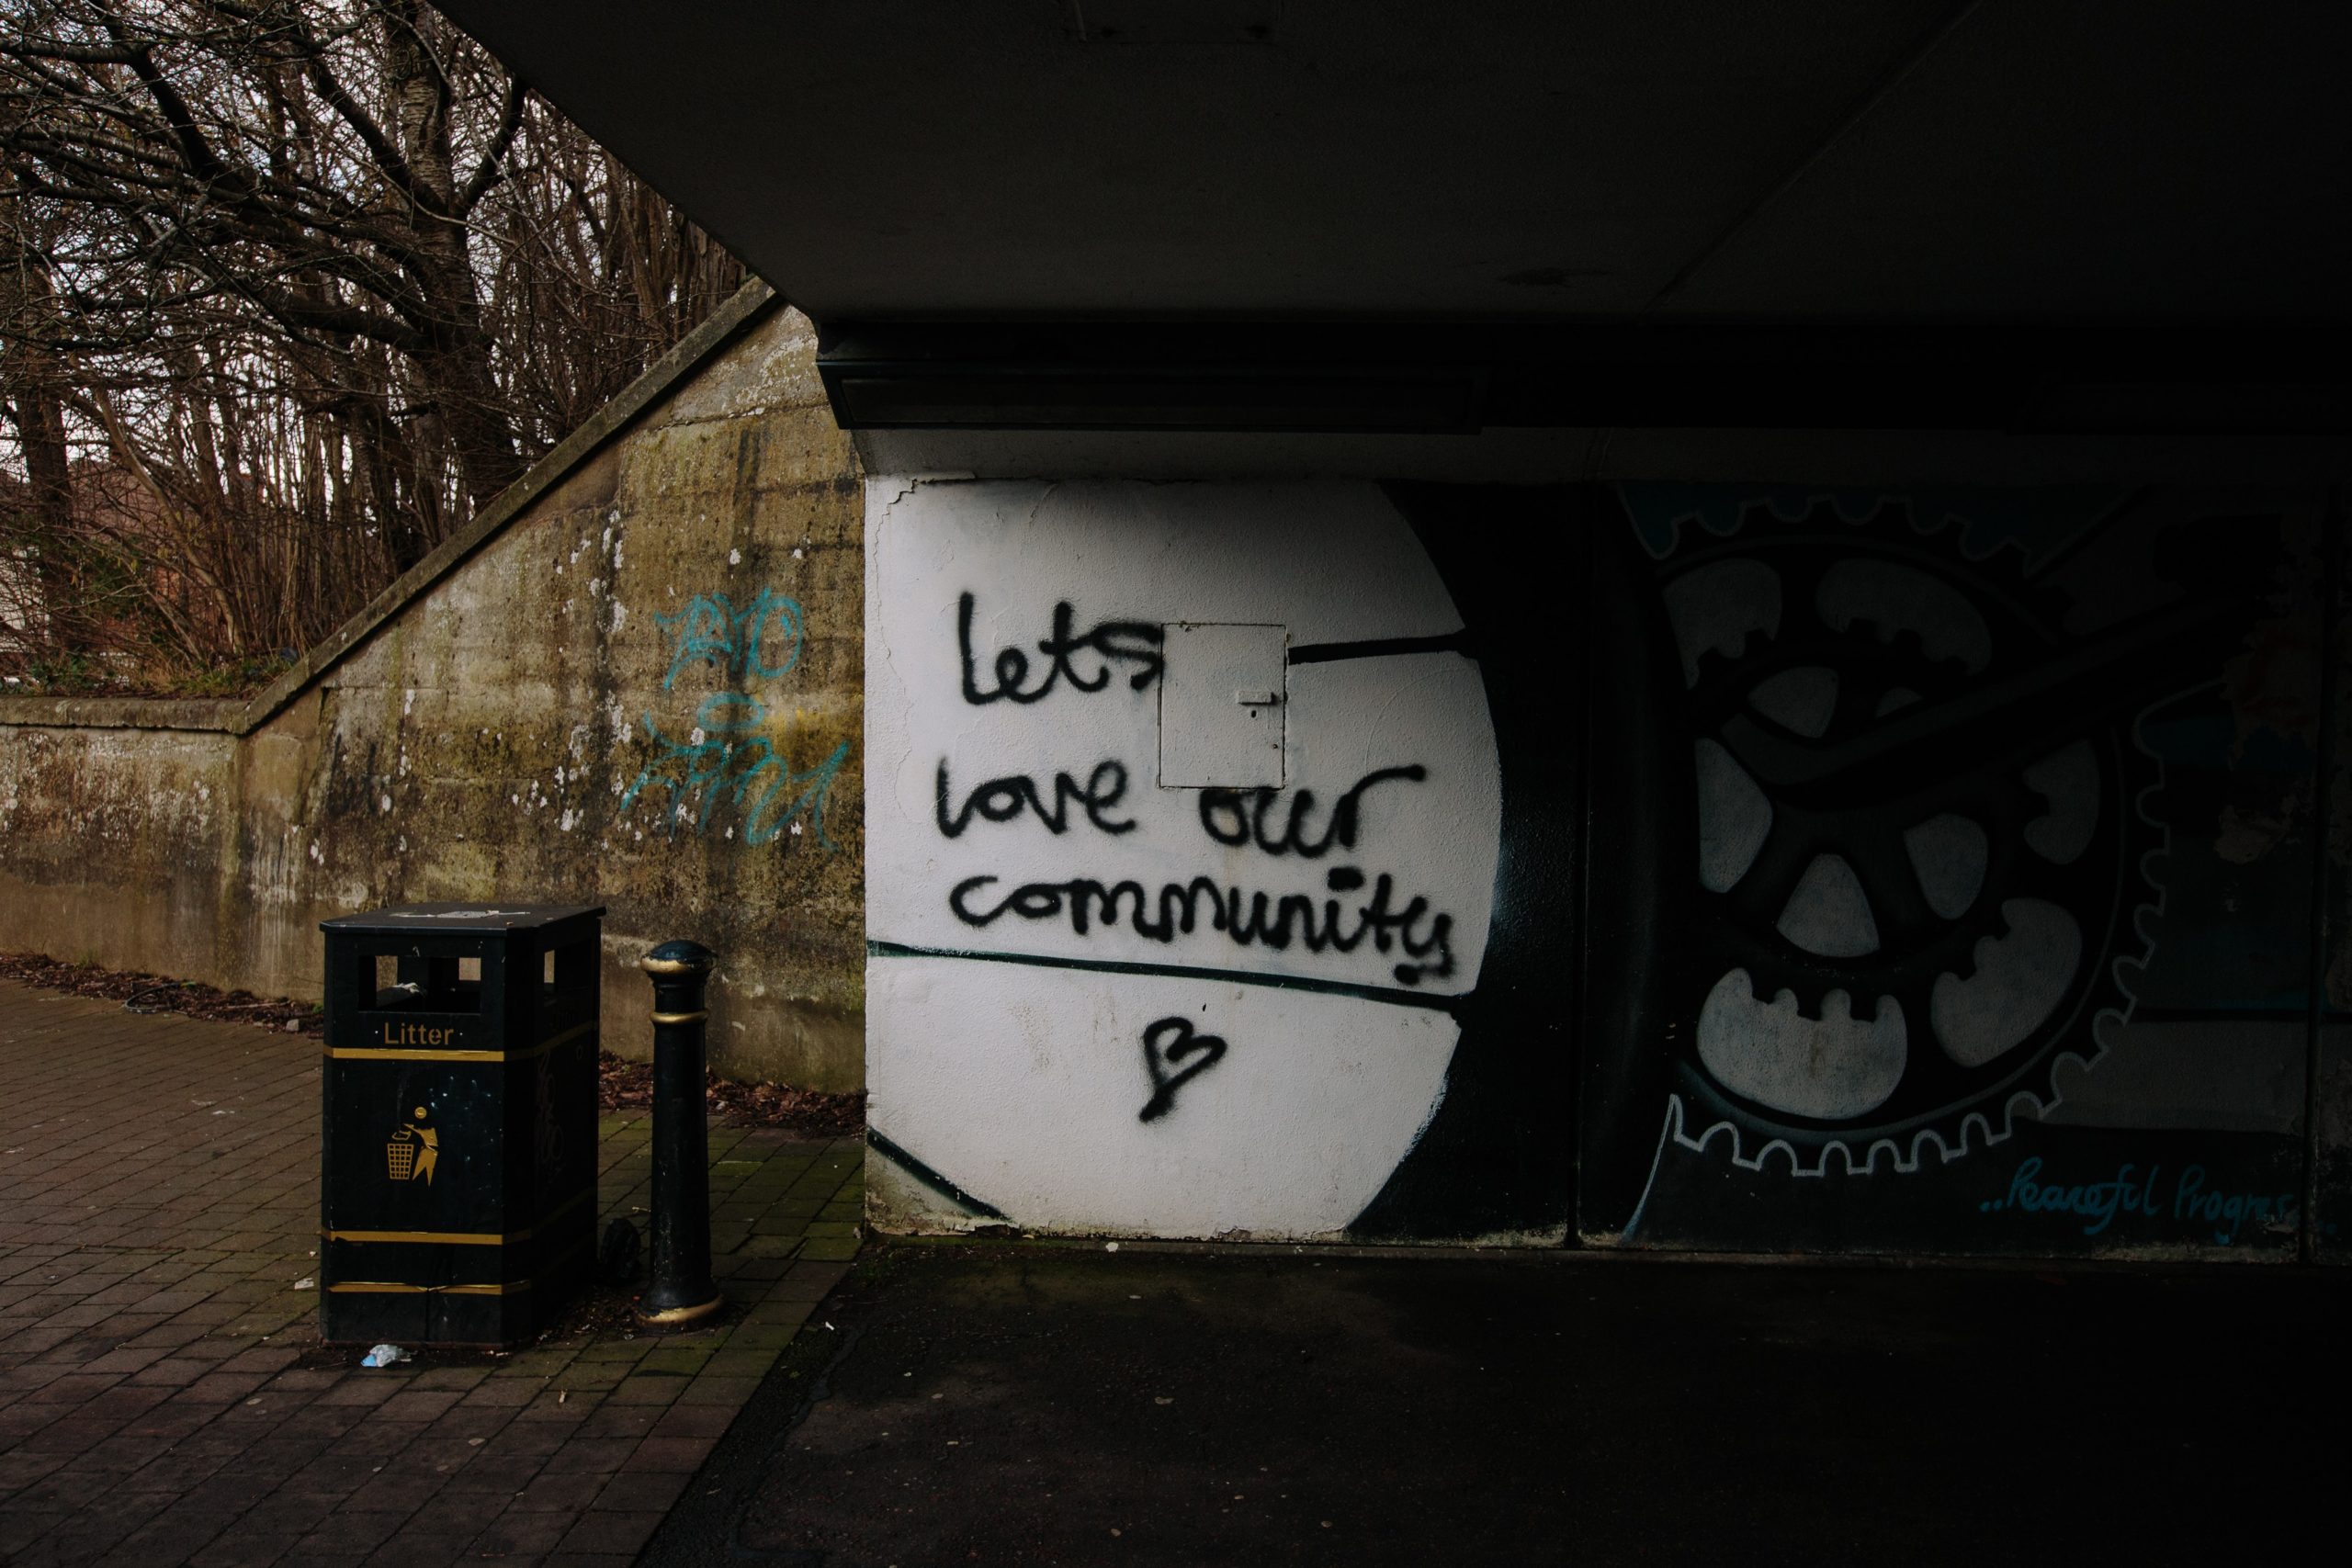 Graffiti - let's love our community